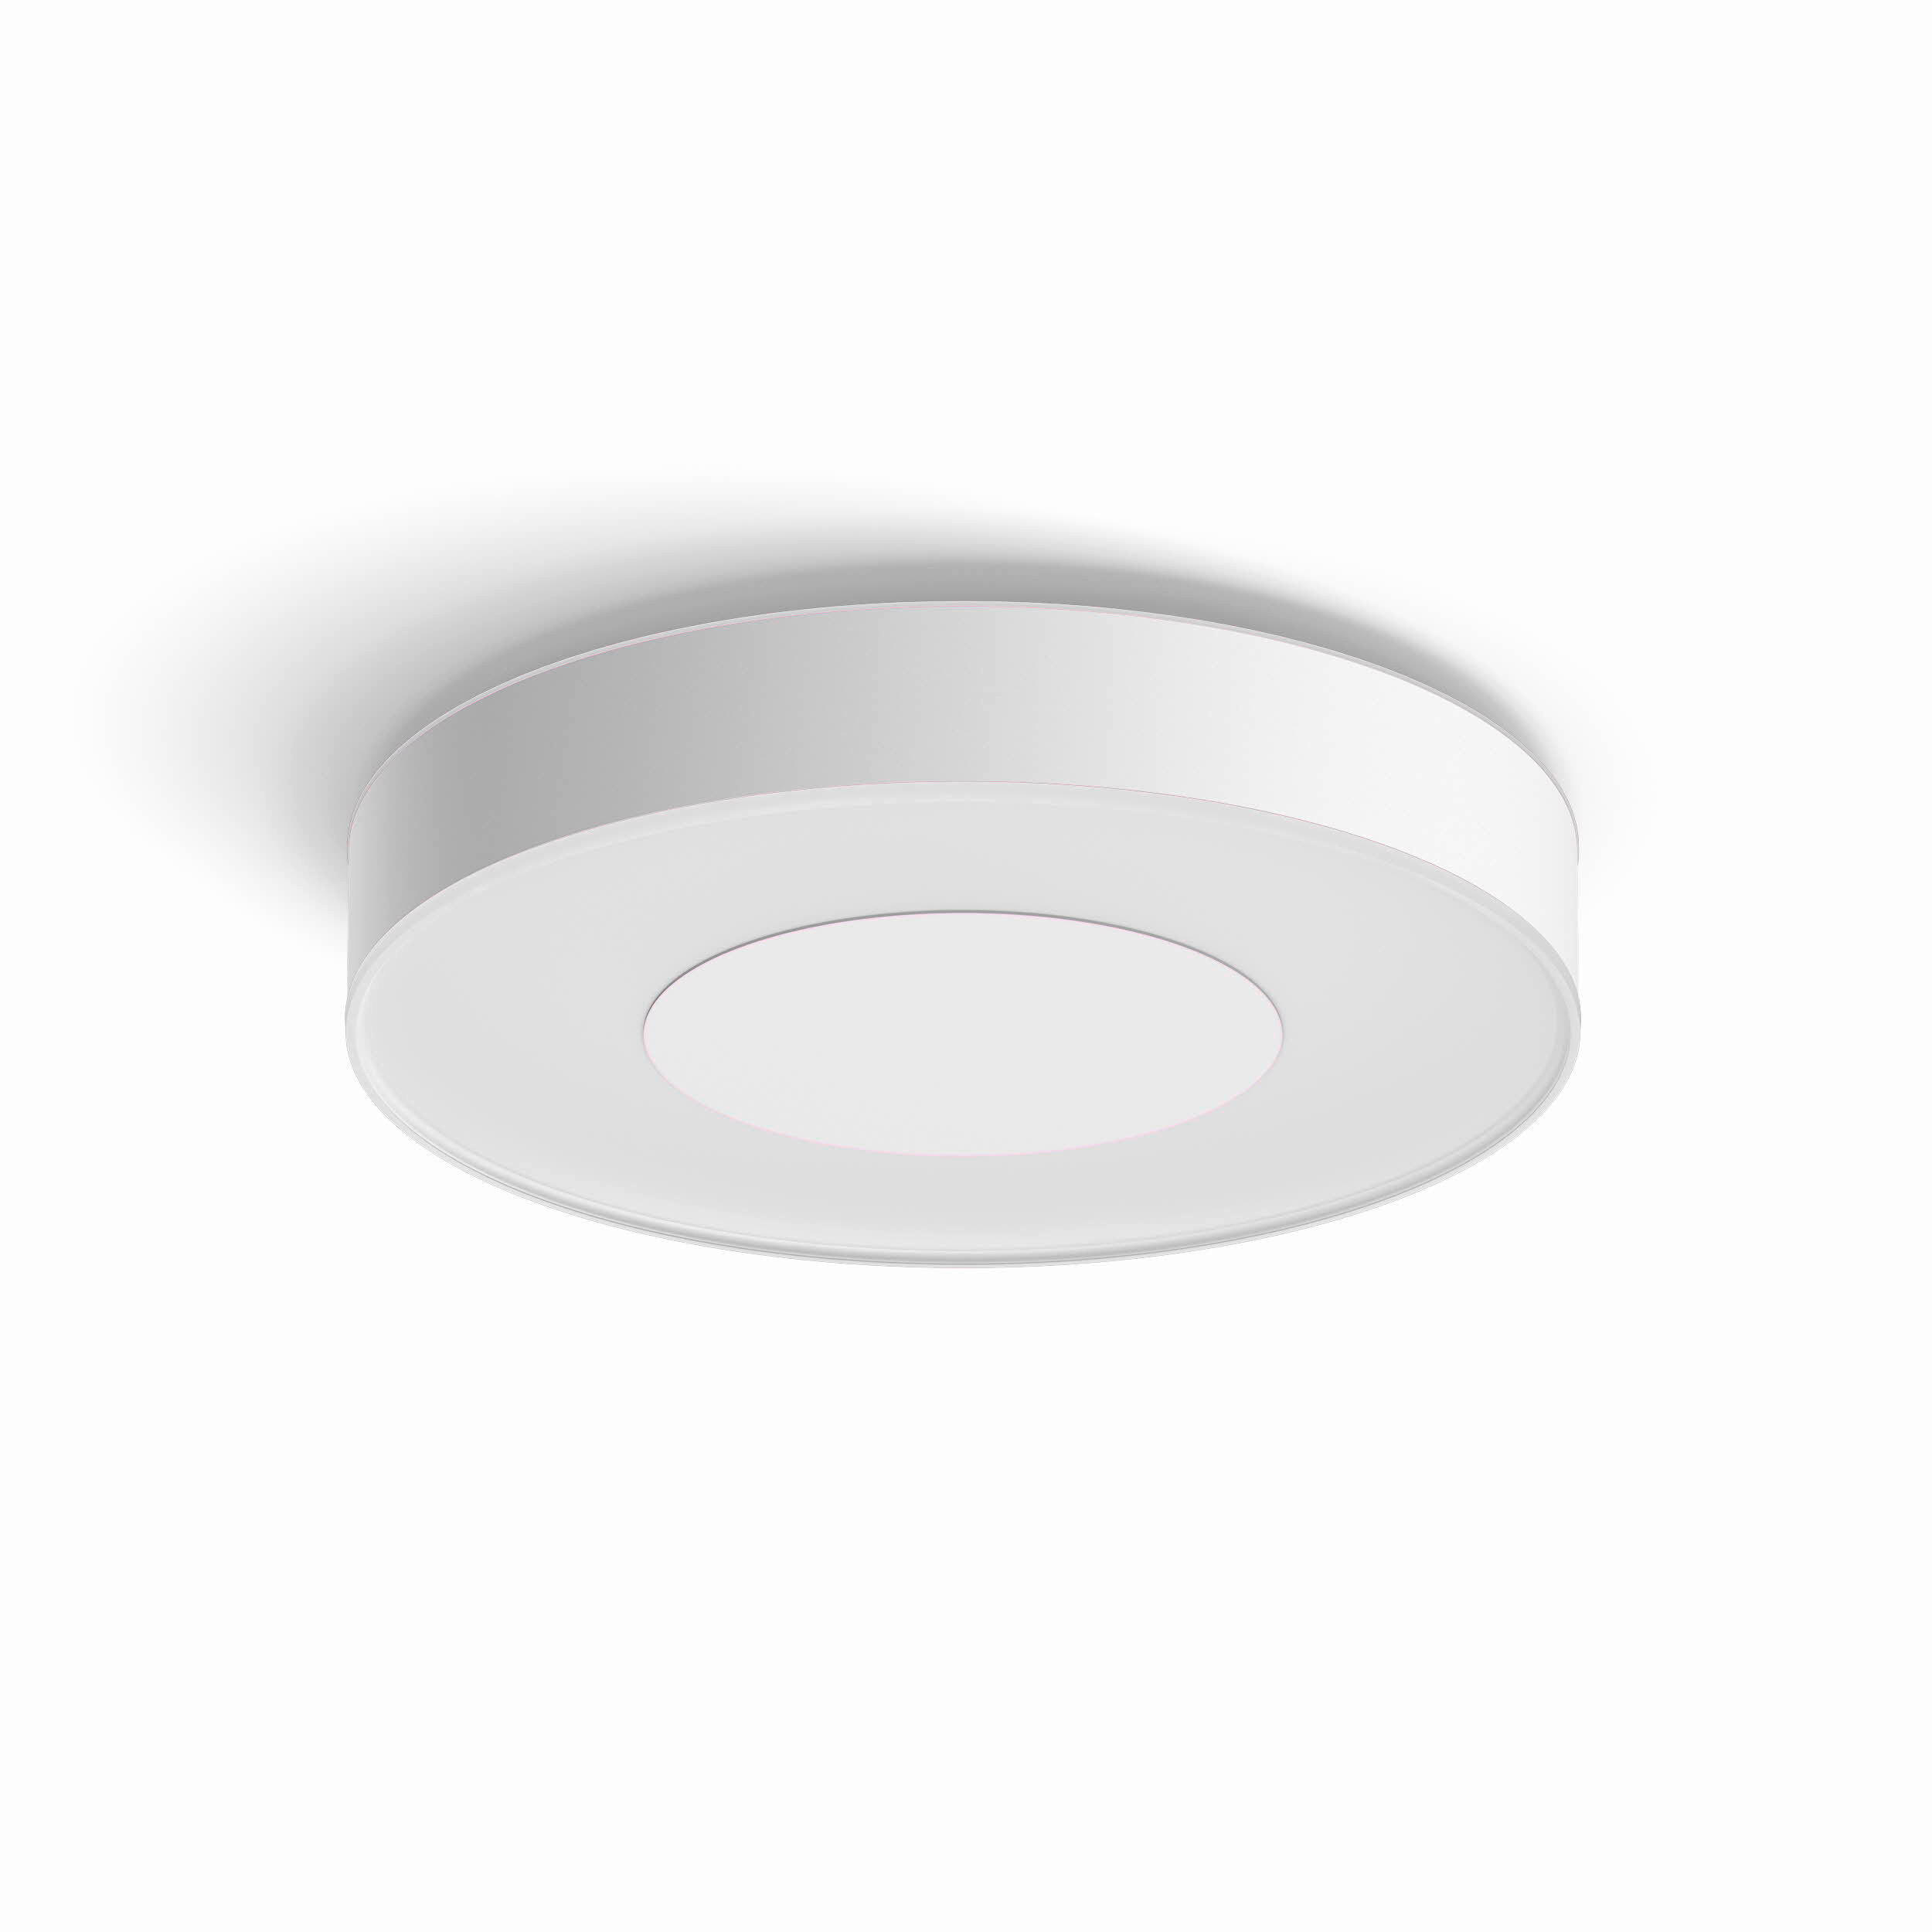 LED-DECKENLEUCHTE White & Color Ambiance Waca Xamento 42,5/8,4 cm   - Weiß, Design, Kunststoff/Metall (42,5/8,4cm) - Philips HUE